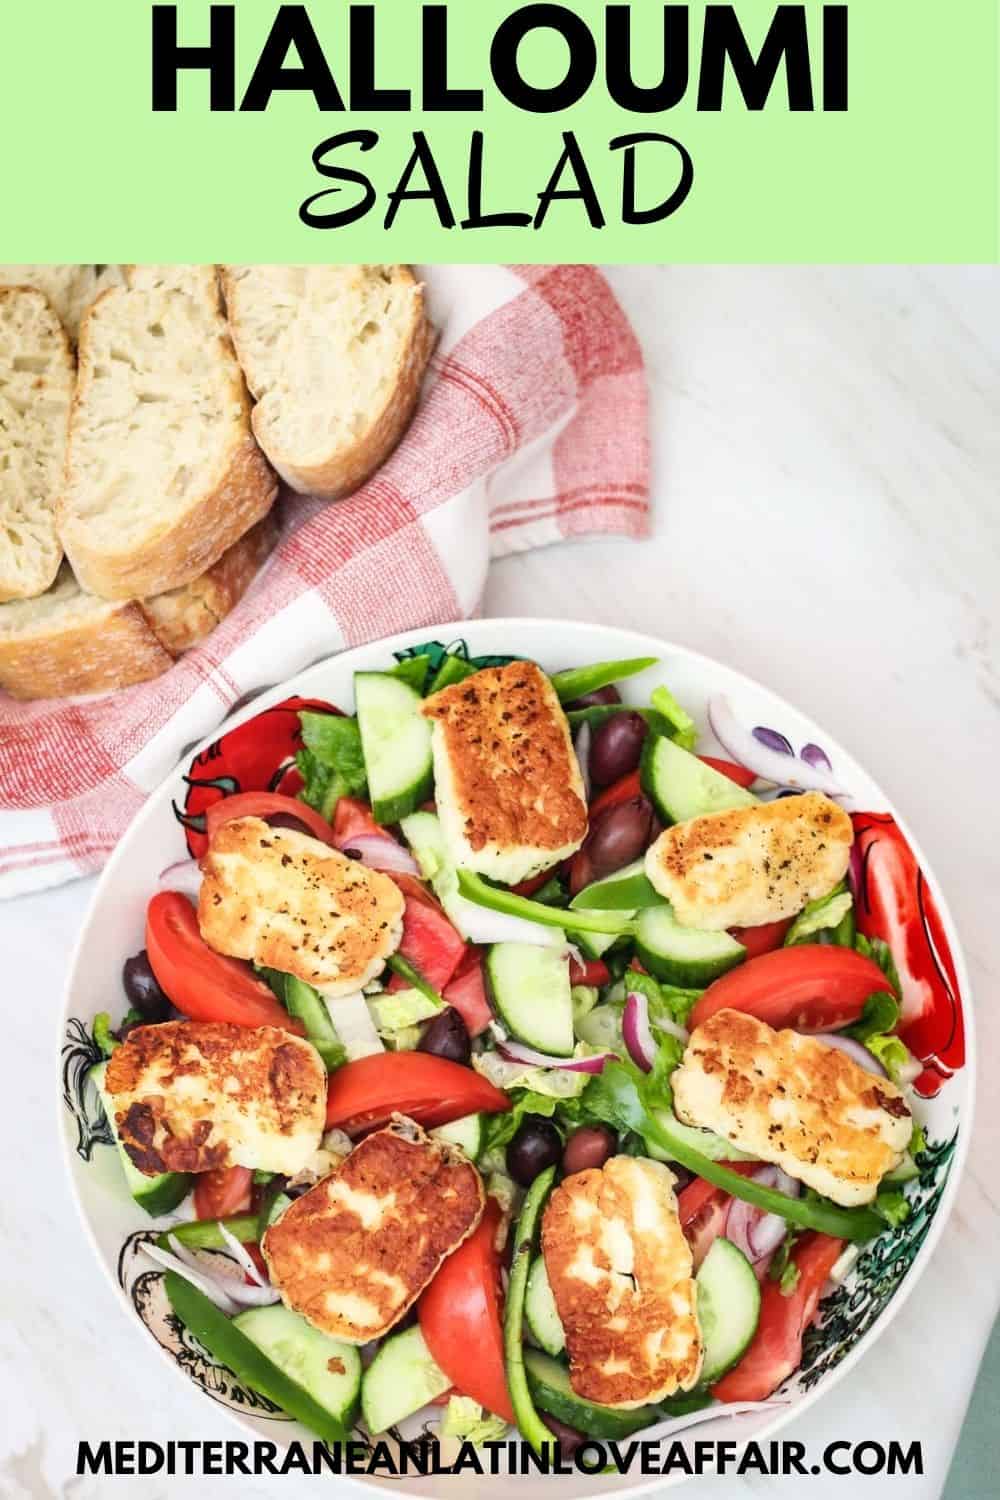 A vegetable salad with fried halloumi cheese shown next to a basket of bread. #mediterraneanlatinloveaffair, #salad, #halloumi